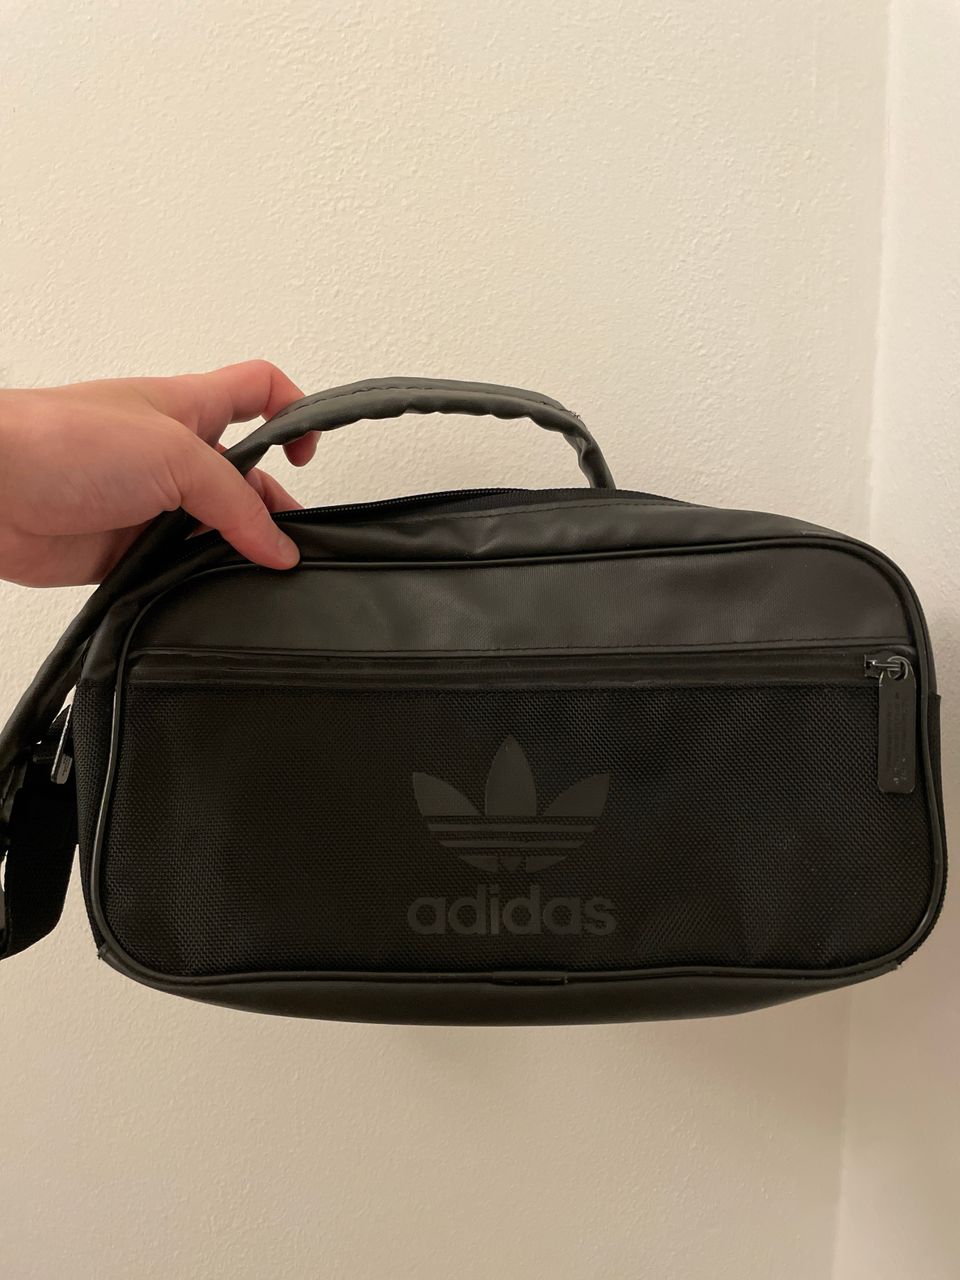 Adidas shoulder bag laukku